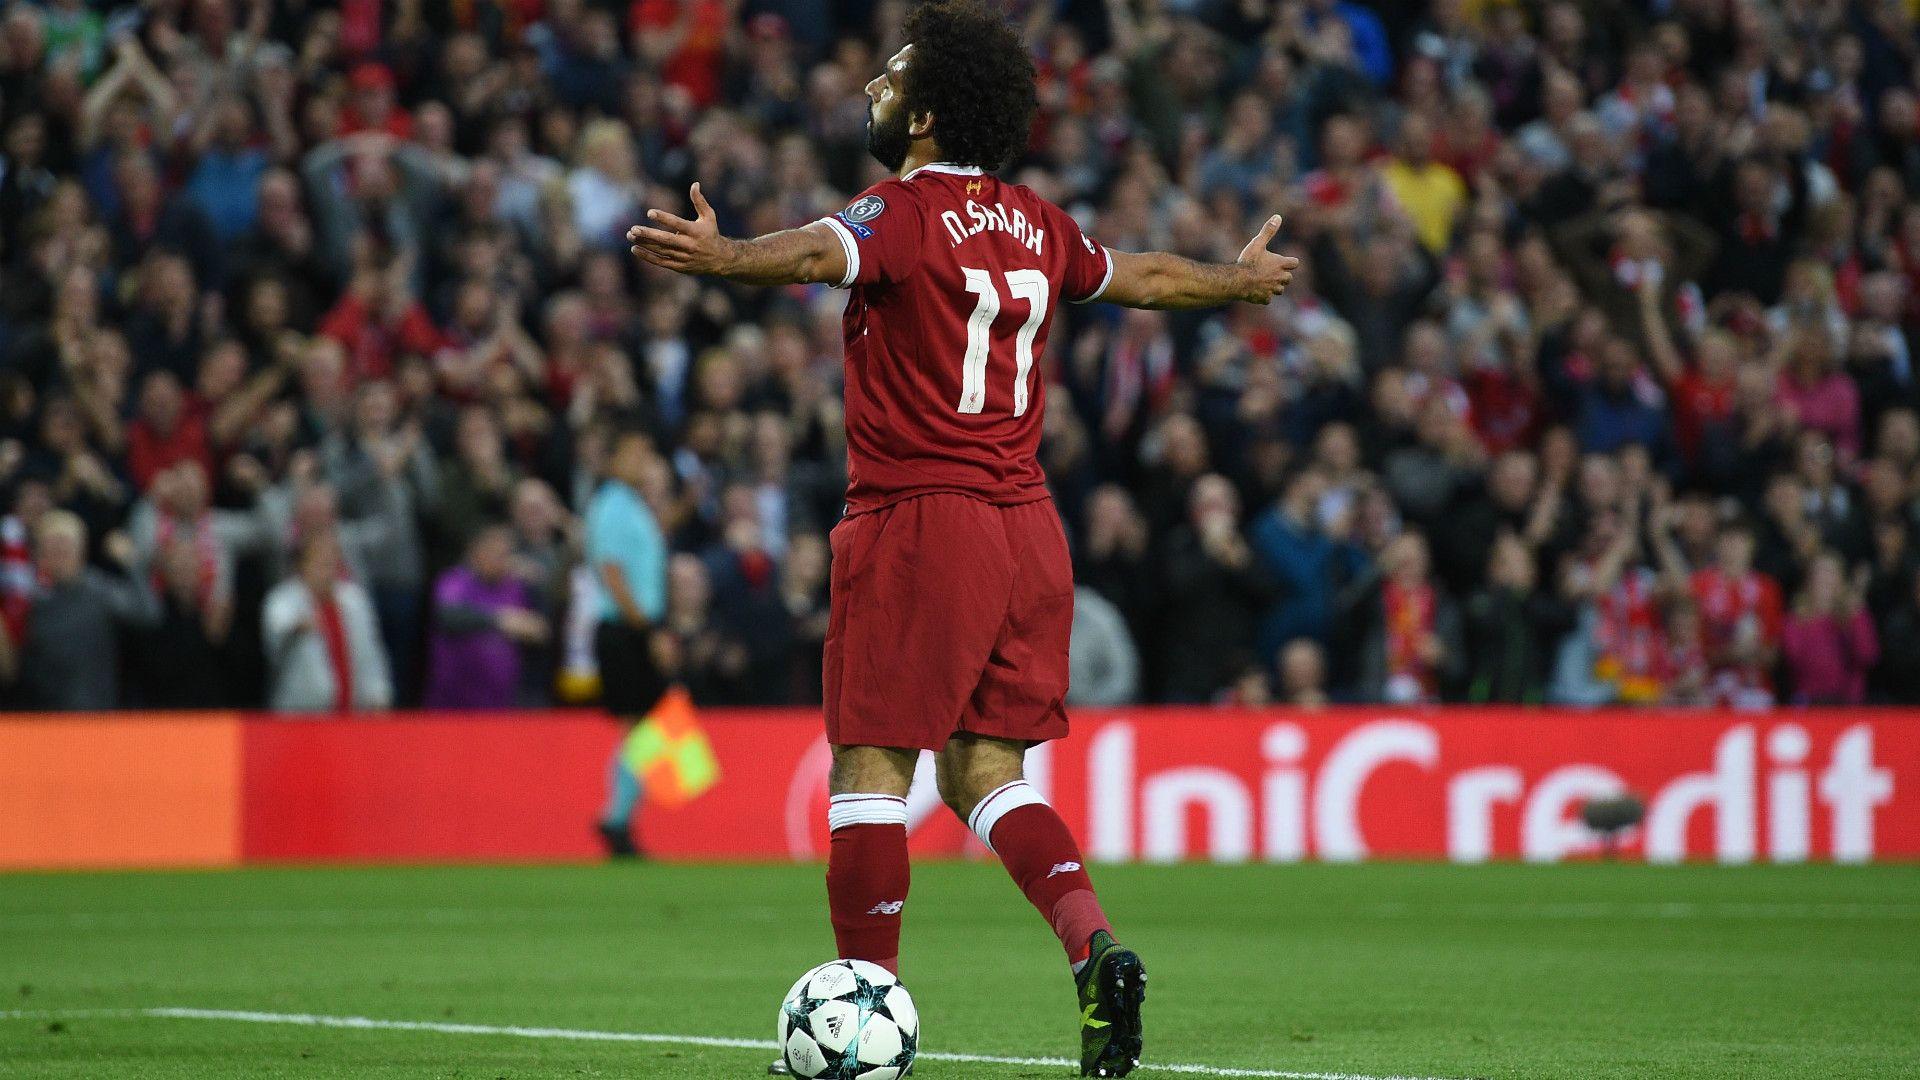 Welcome back, Liverpool! Mane, Firmino & Salah guarantee goals